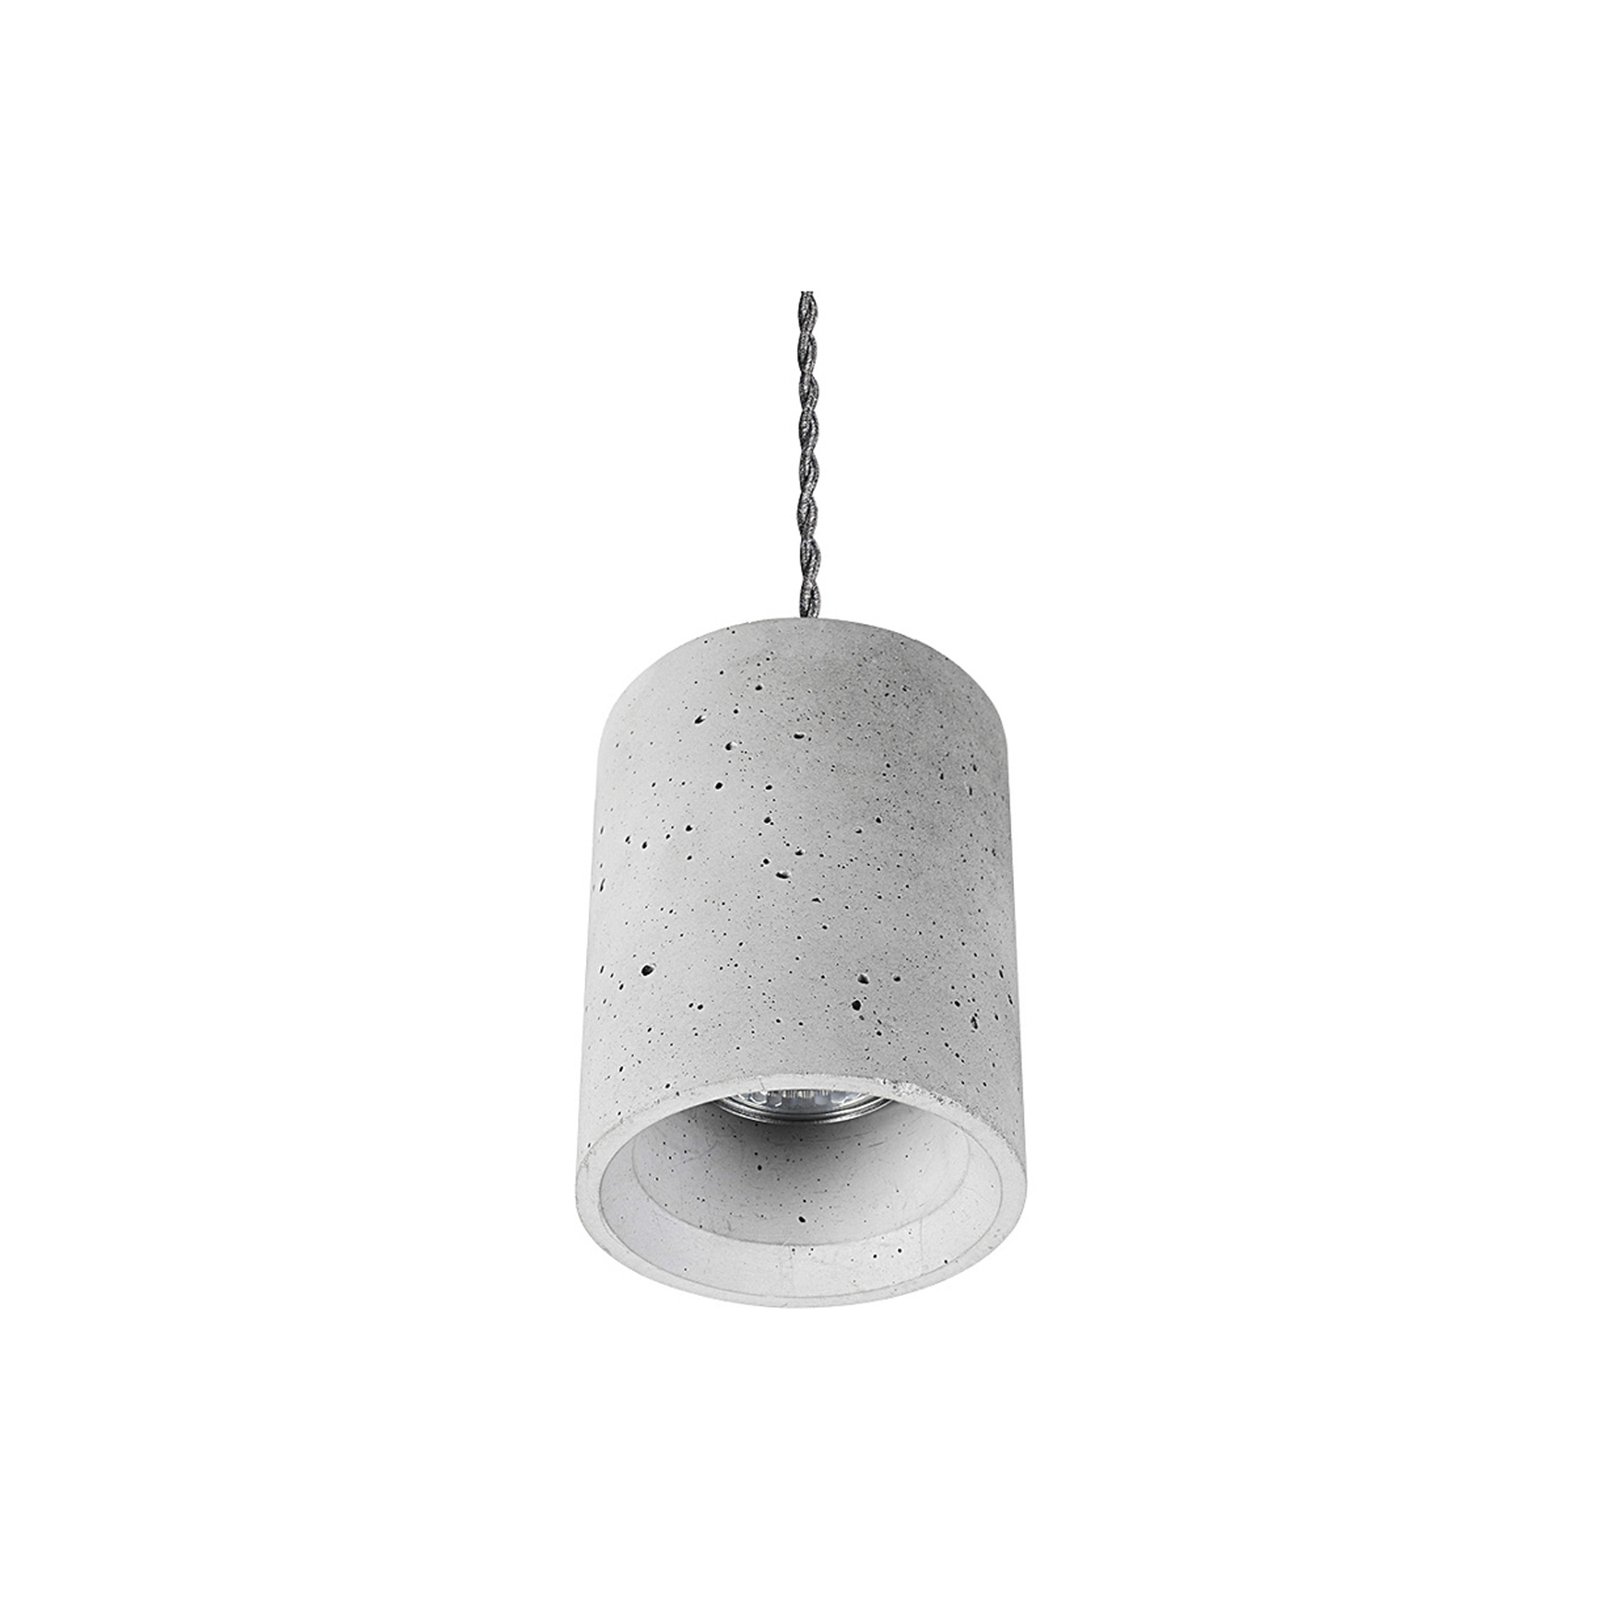 Hanglamp Shy met betonkap